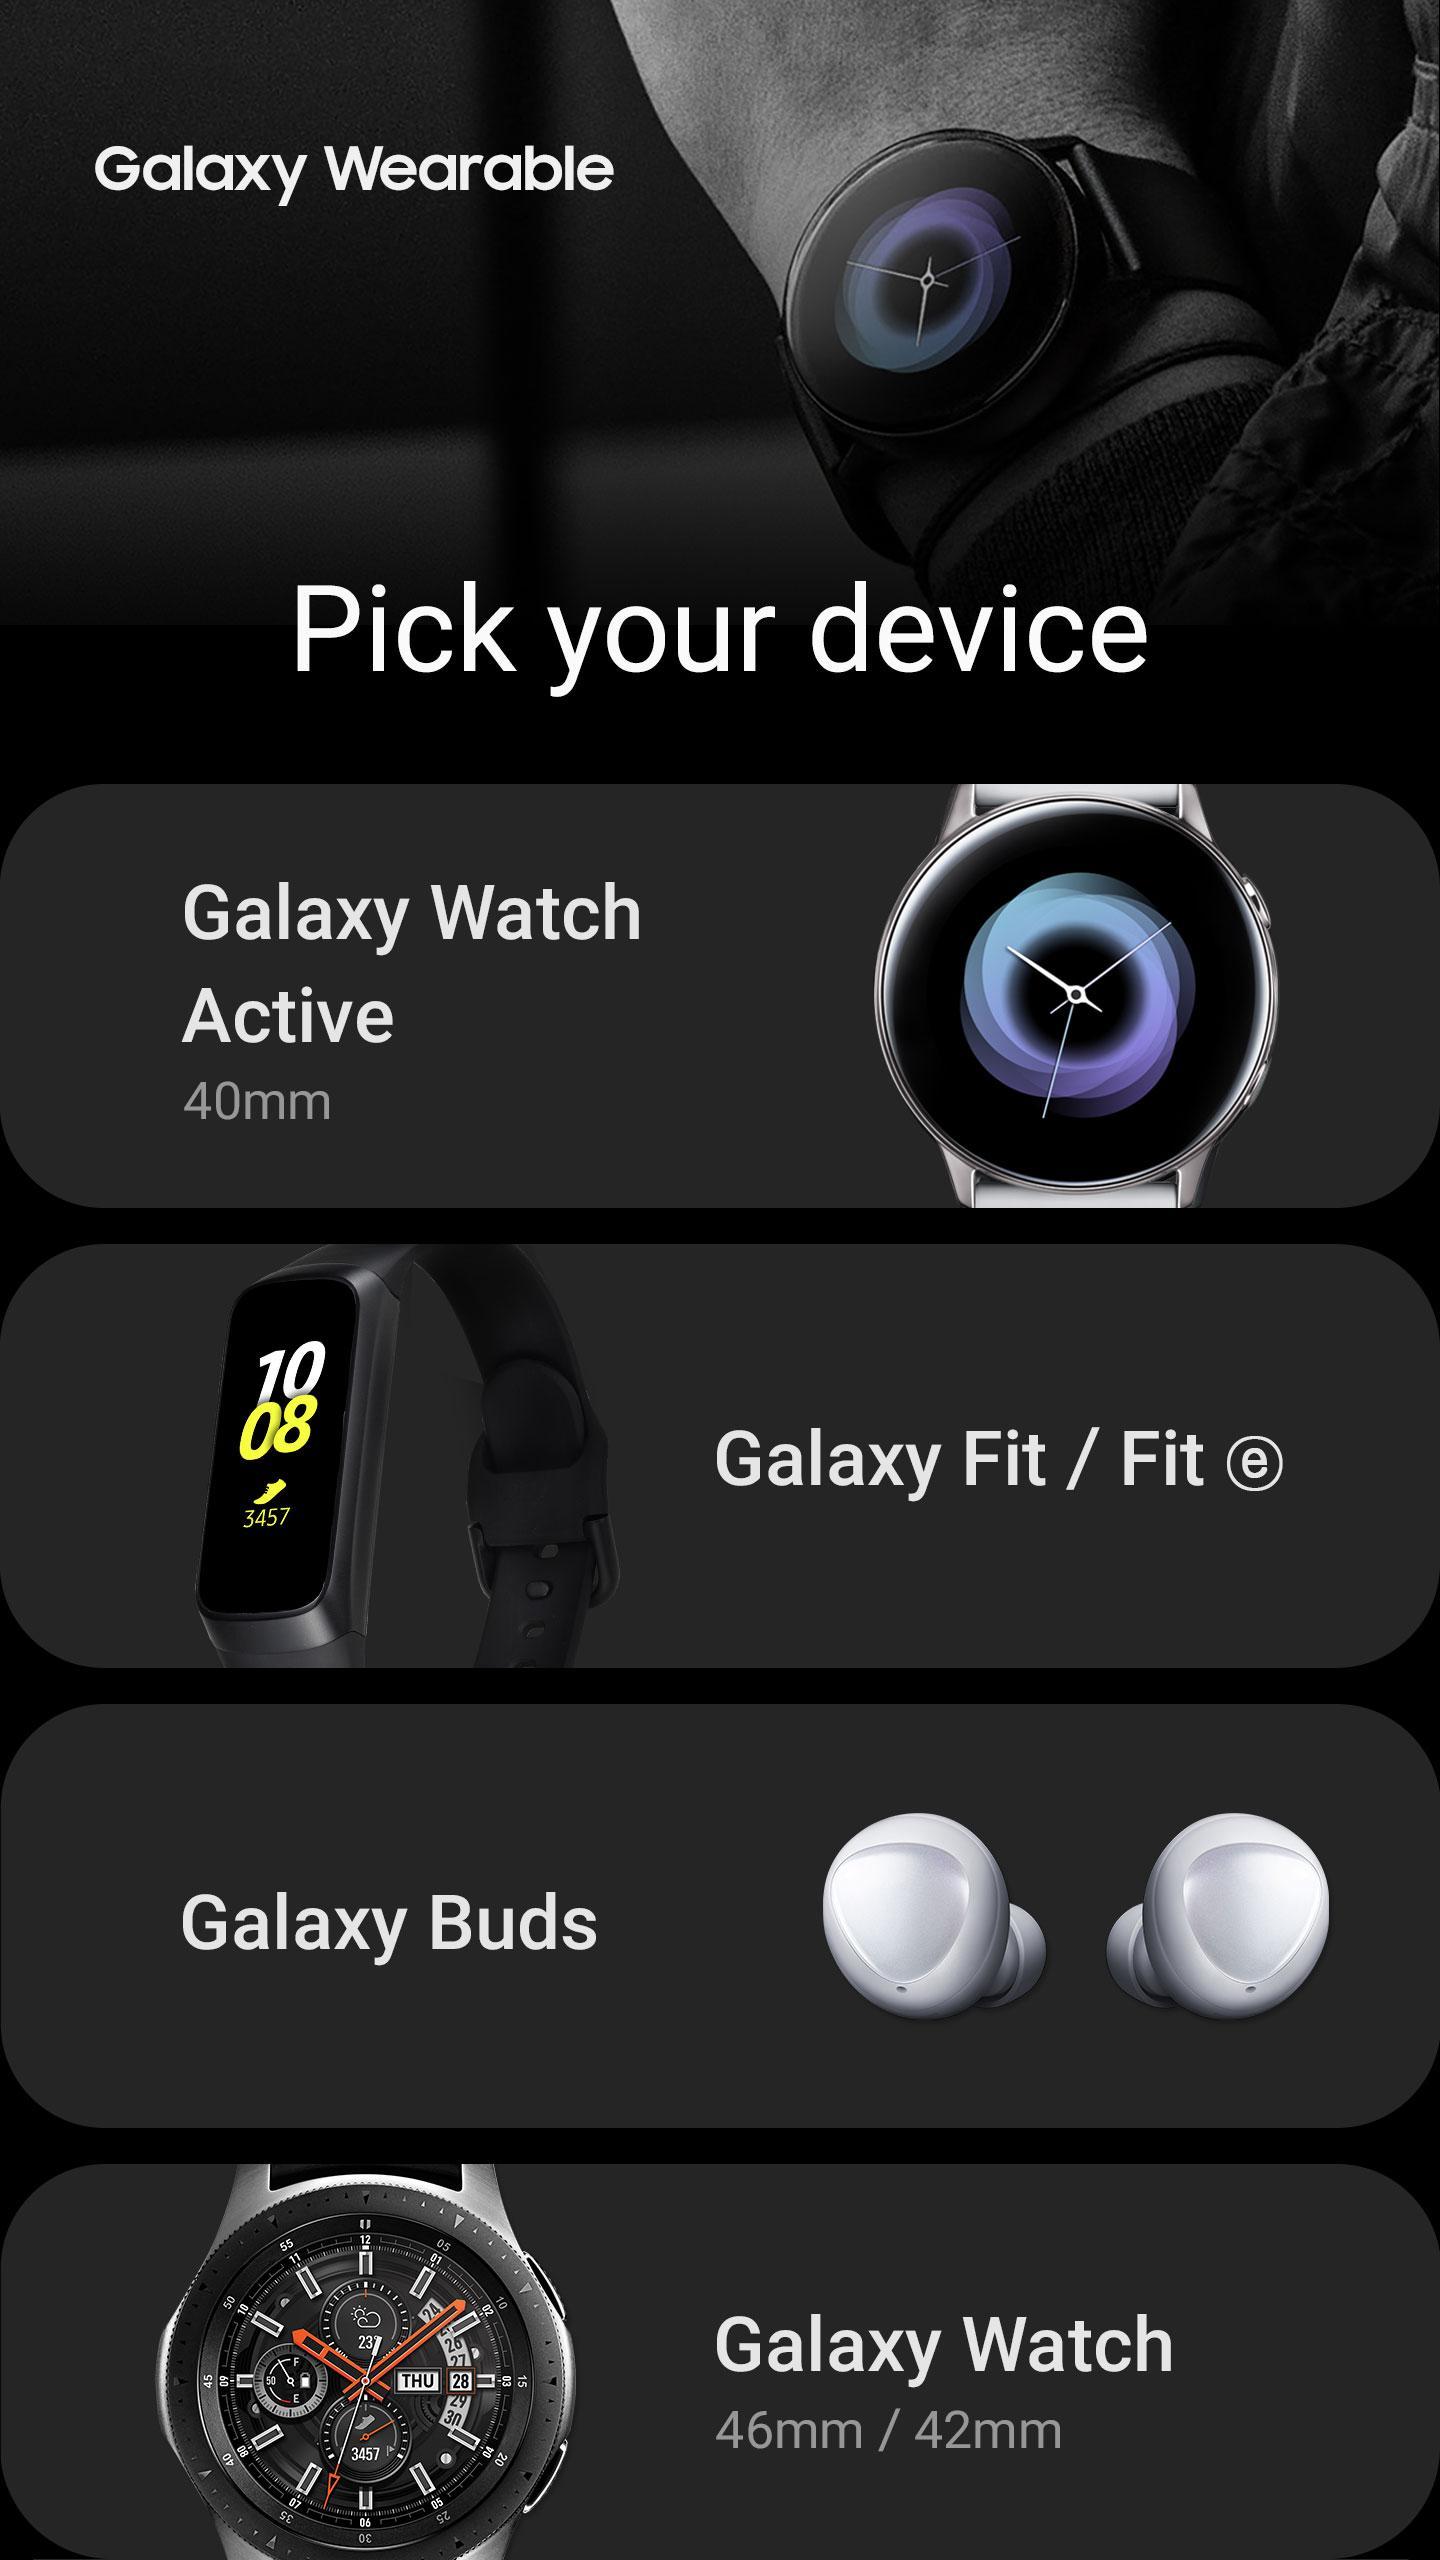 Samsung Galaxy Wearable. Galaxy Wearable Samsung Gear. Galaxy Wearable Интерфейс. Лучшие приложения для Galaxy watch. Galaxy wearable на андроид